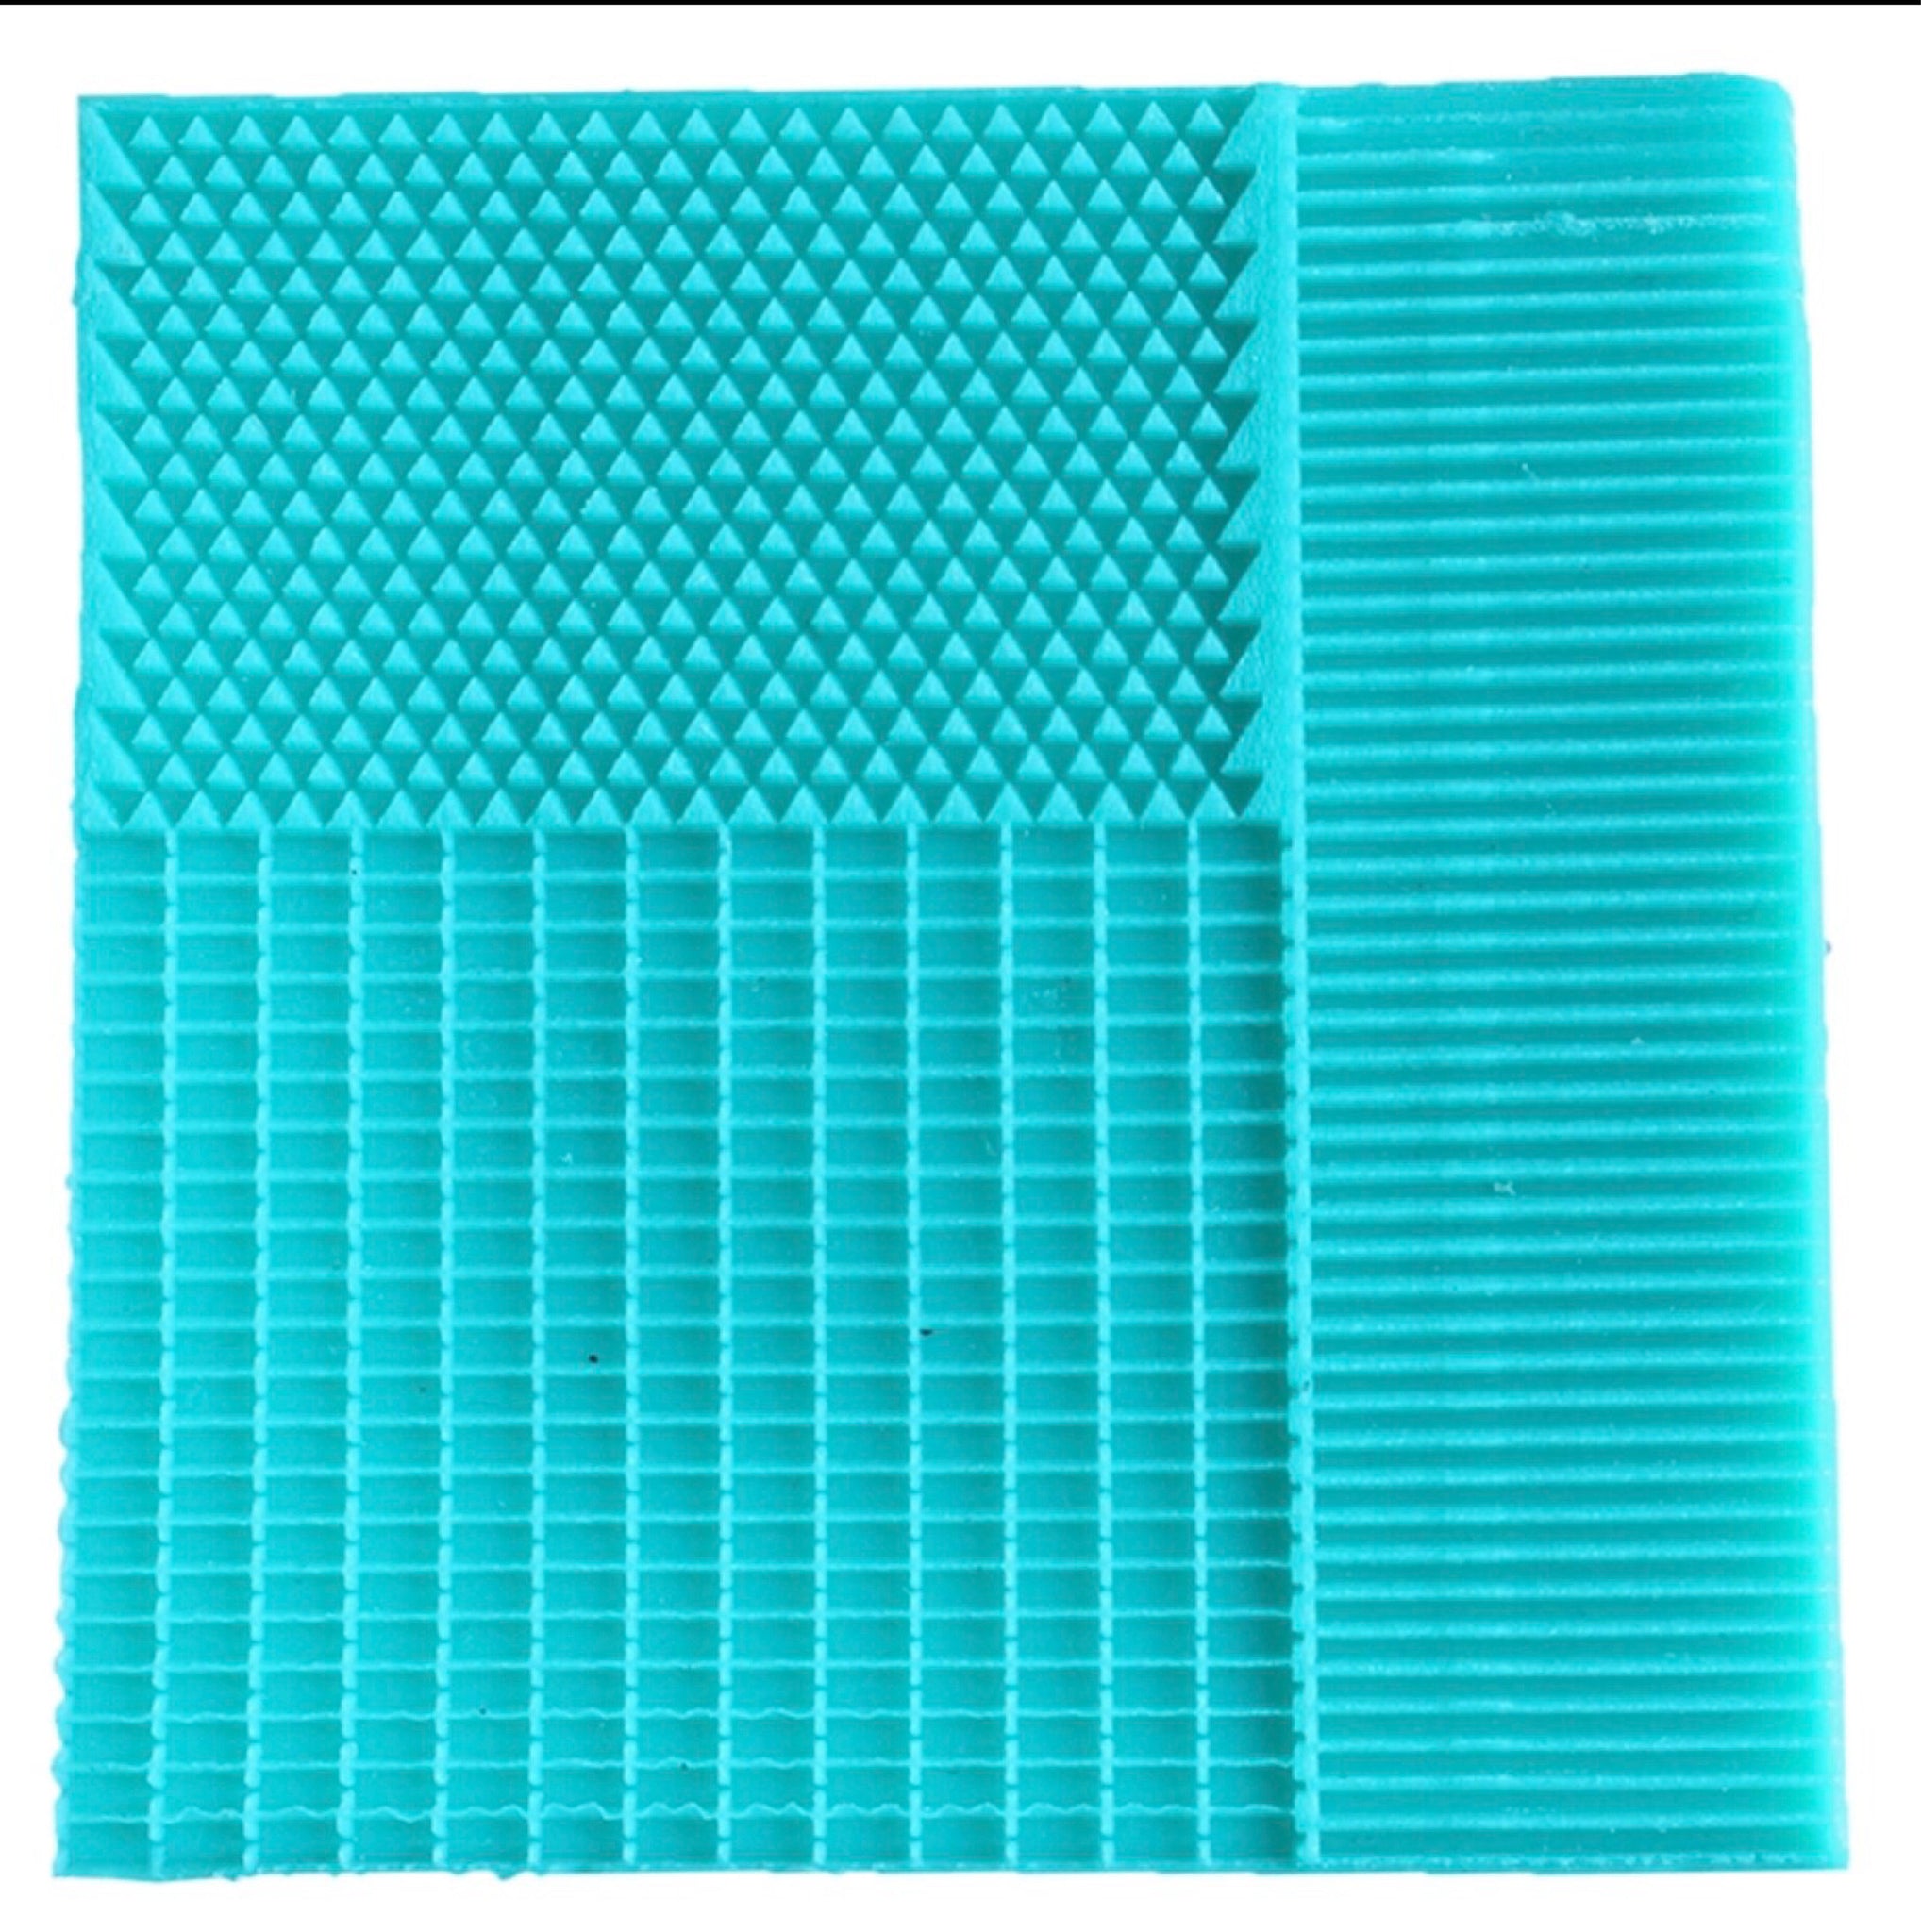 Stripe Lace Mat/Mermaid Fish Scale/Grid Fondant Embosser Texture Mold